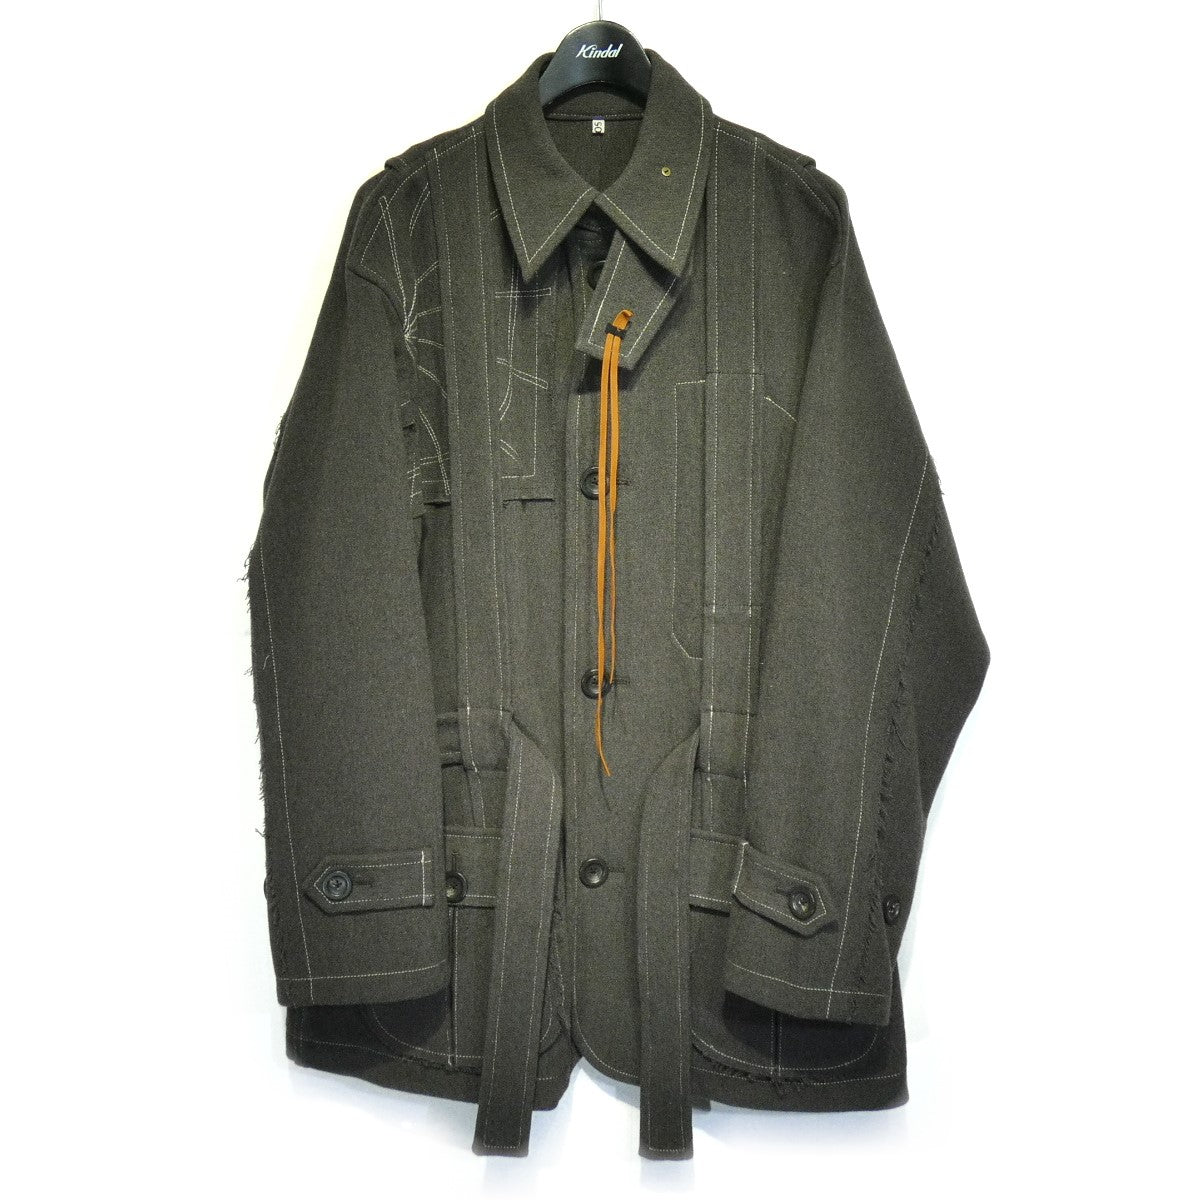 KHOKI(コッキ) 2021AW 「Replica norfolk jacket coat」 ノーフォーク ...